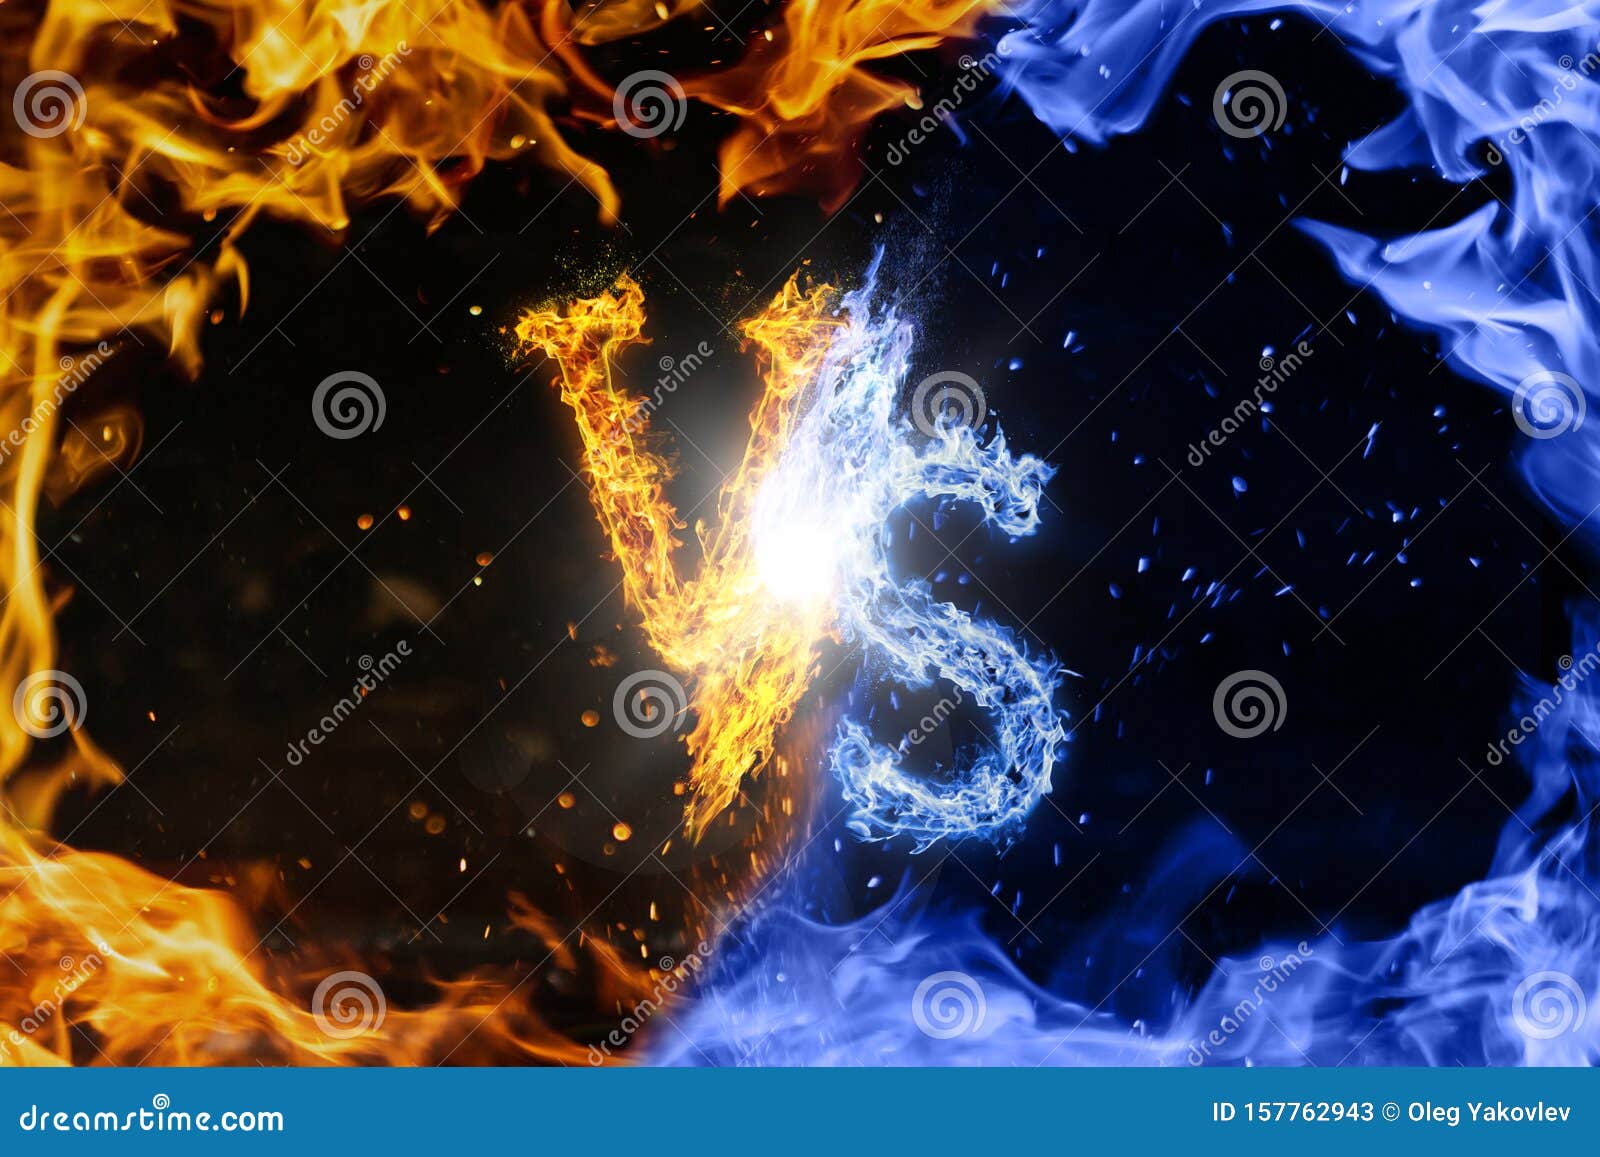 Blue Fire Background Stock Illustrations RoyaltyFree Vector Graphics   Clip Art  iStock